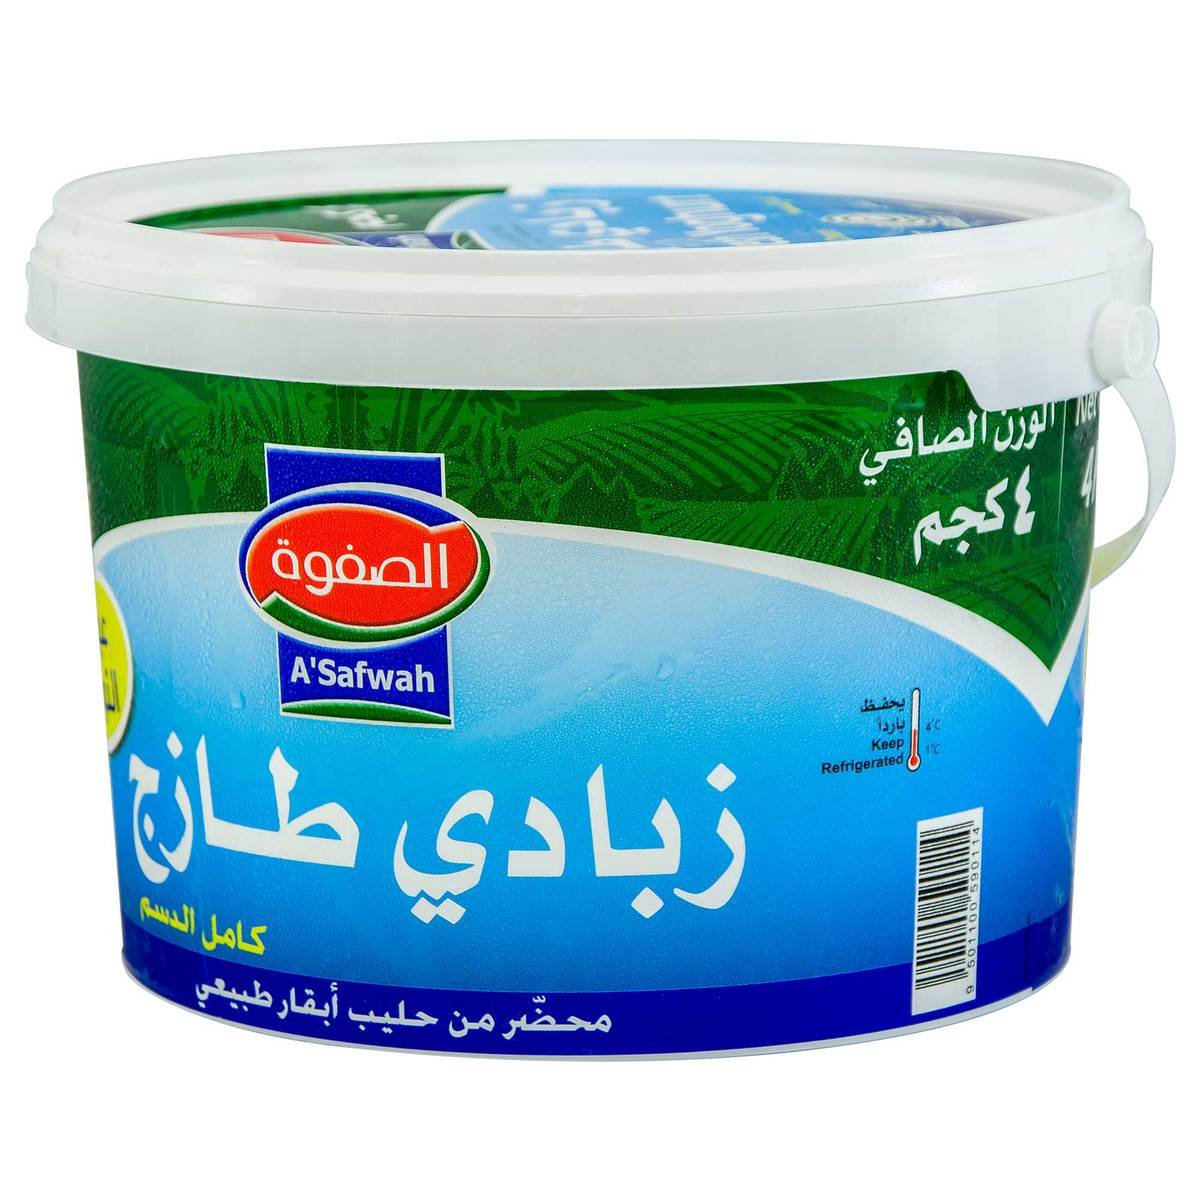 A'Safwah Fresh Yoghurt Full Cream 4kg